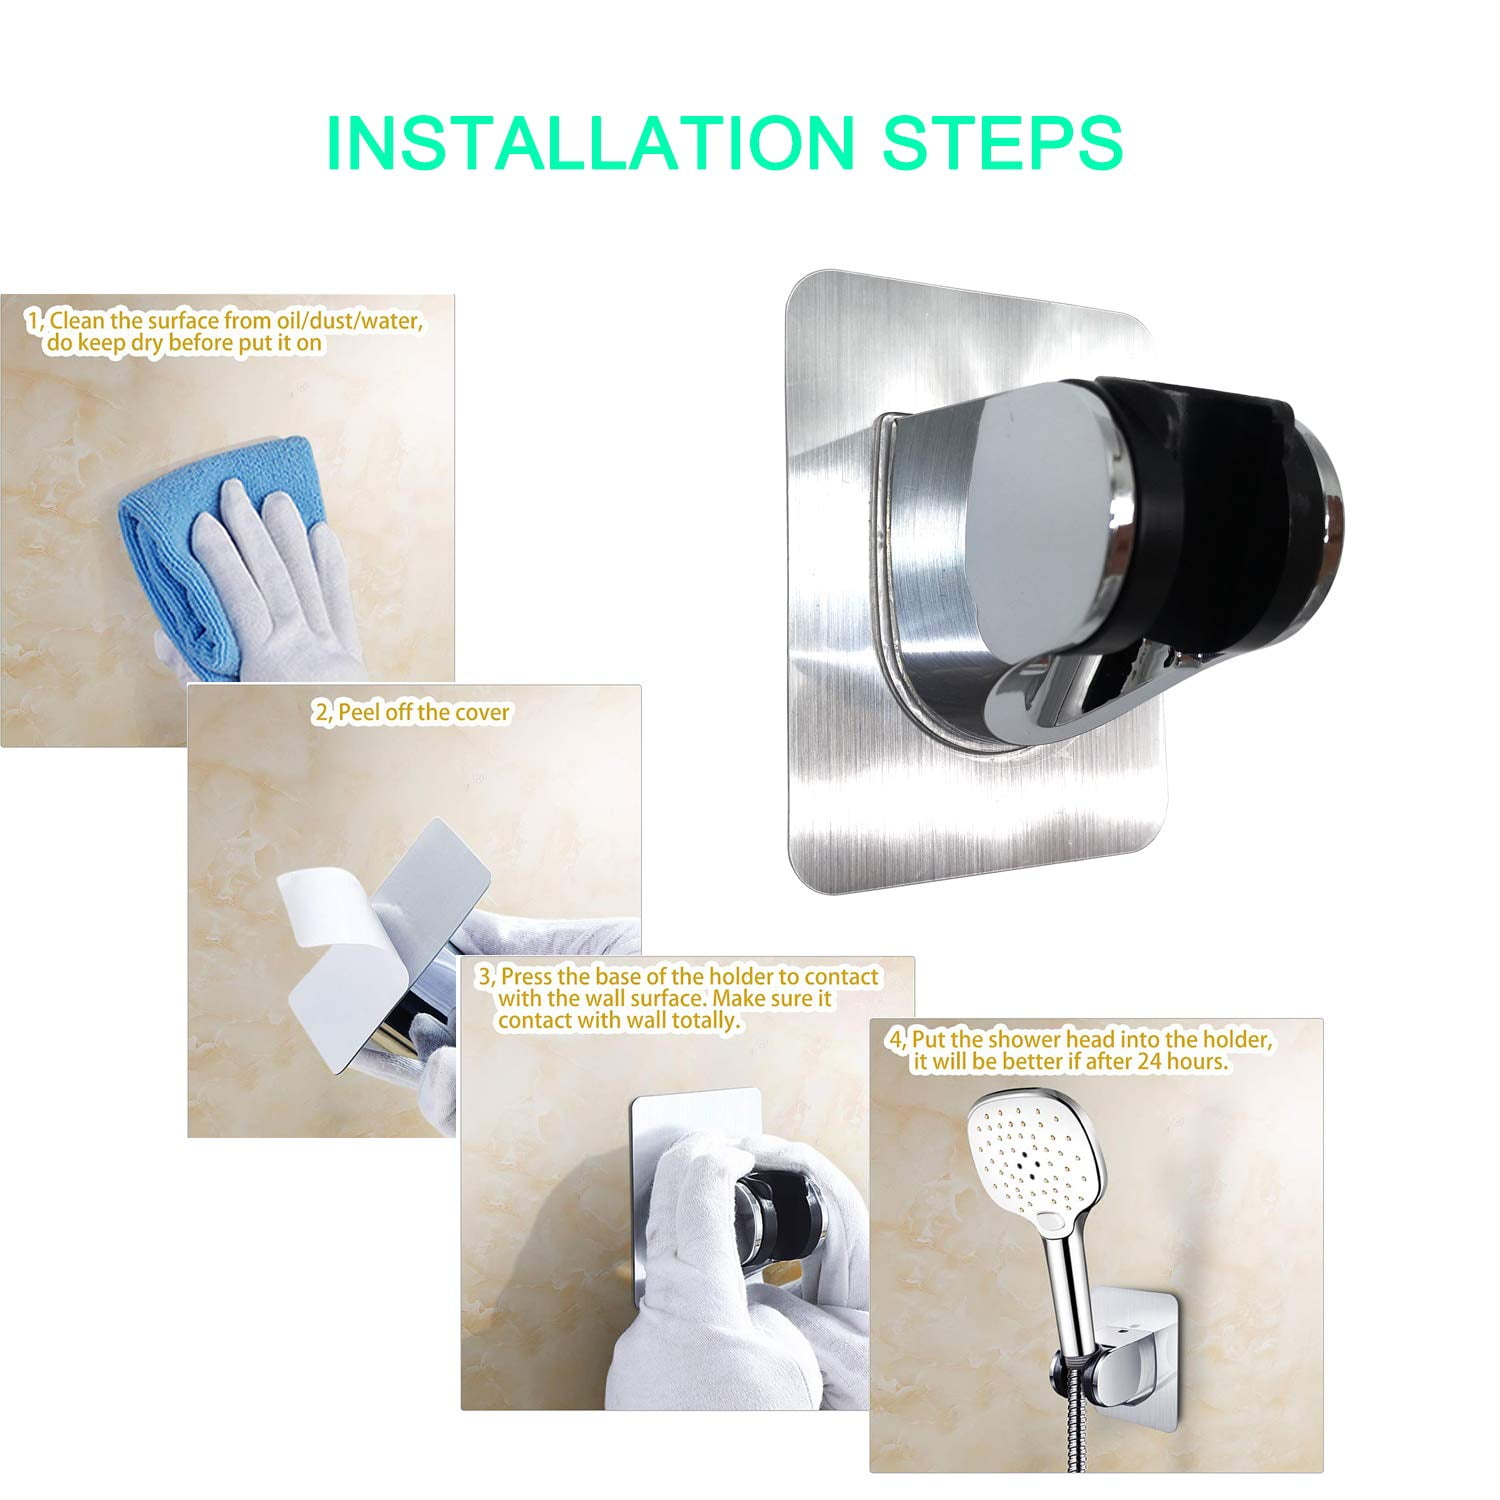 Strong Adhesive and Waterproof Shower Head Holder, Adjustable Handheld  Shower Holder Wall Mount Shower Bracket by Lofekea 